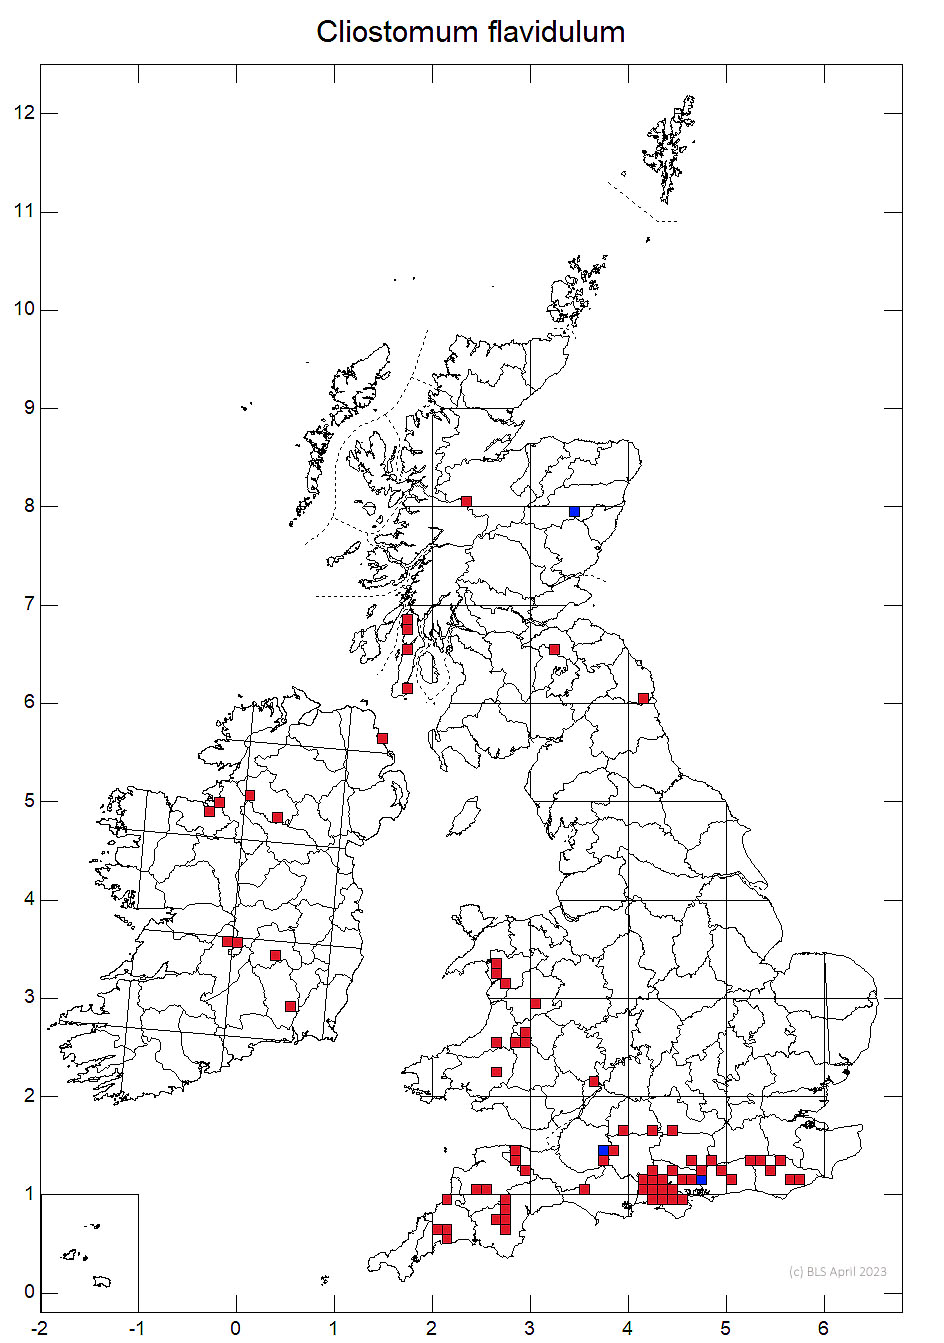 Cliostomum flavidulum 10km sq distribution map